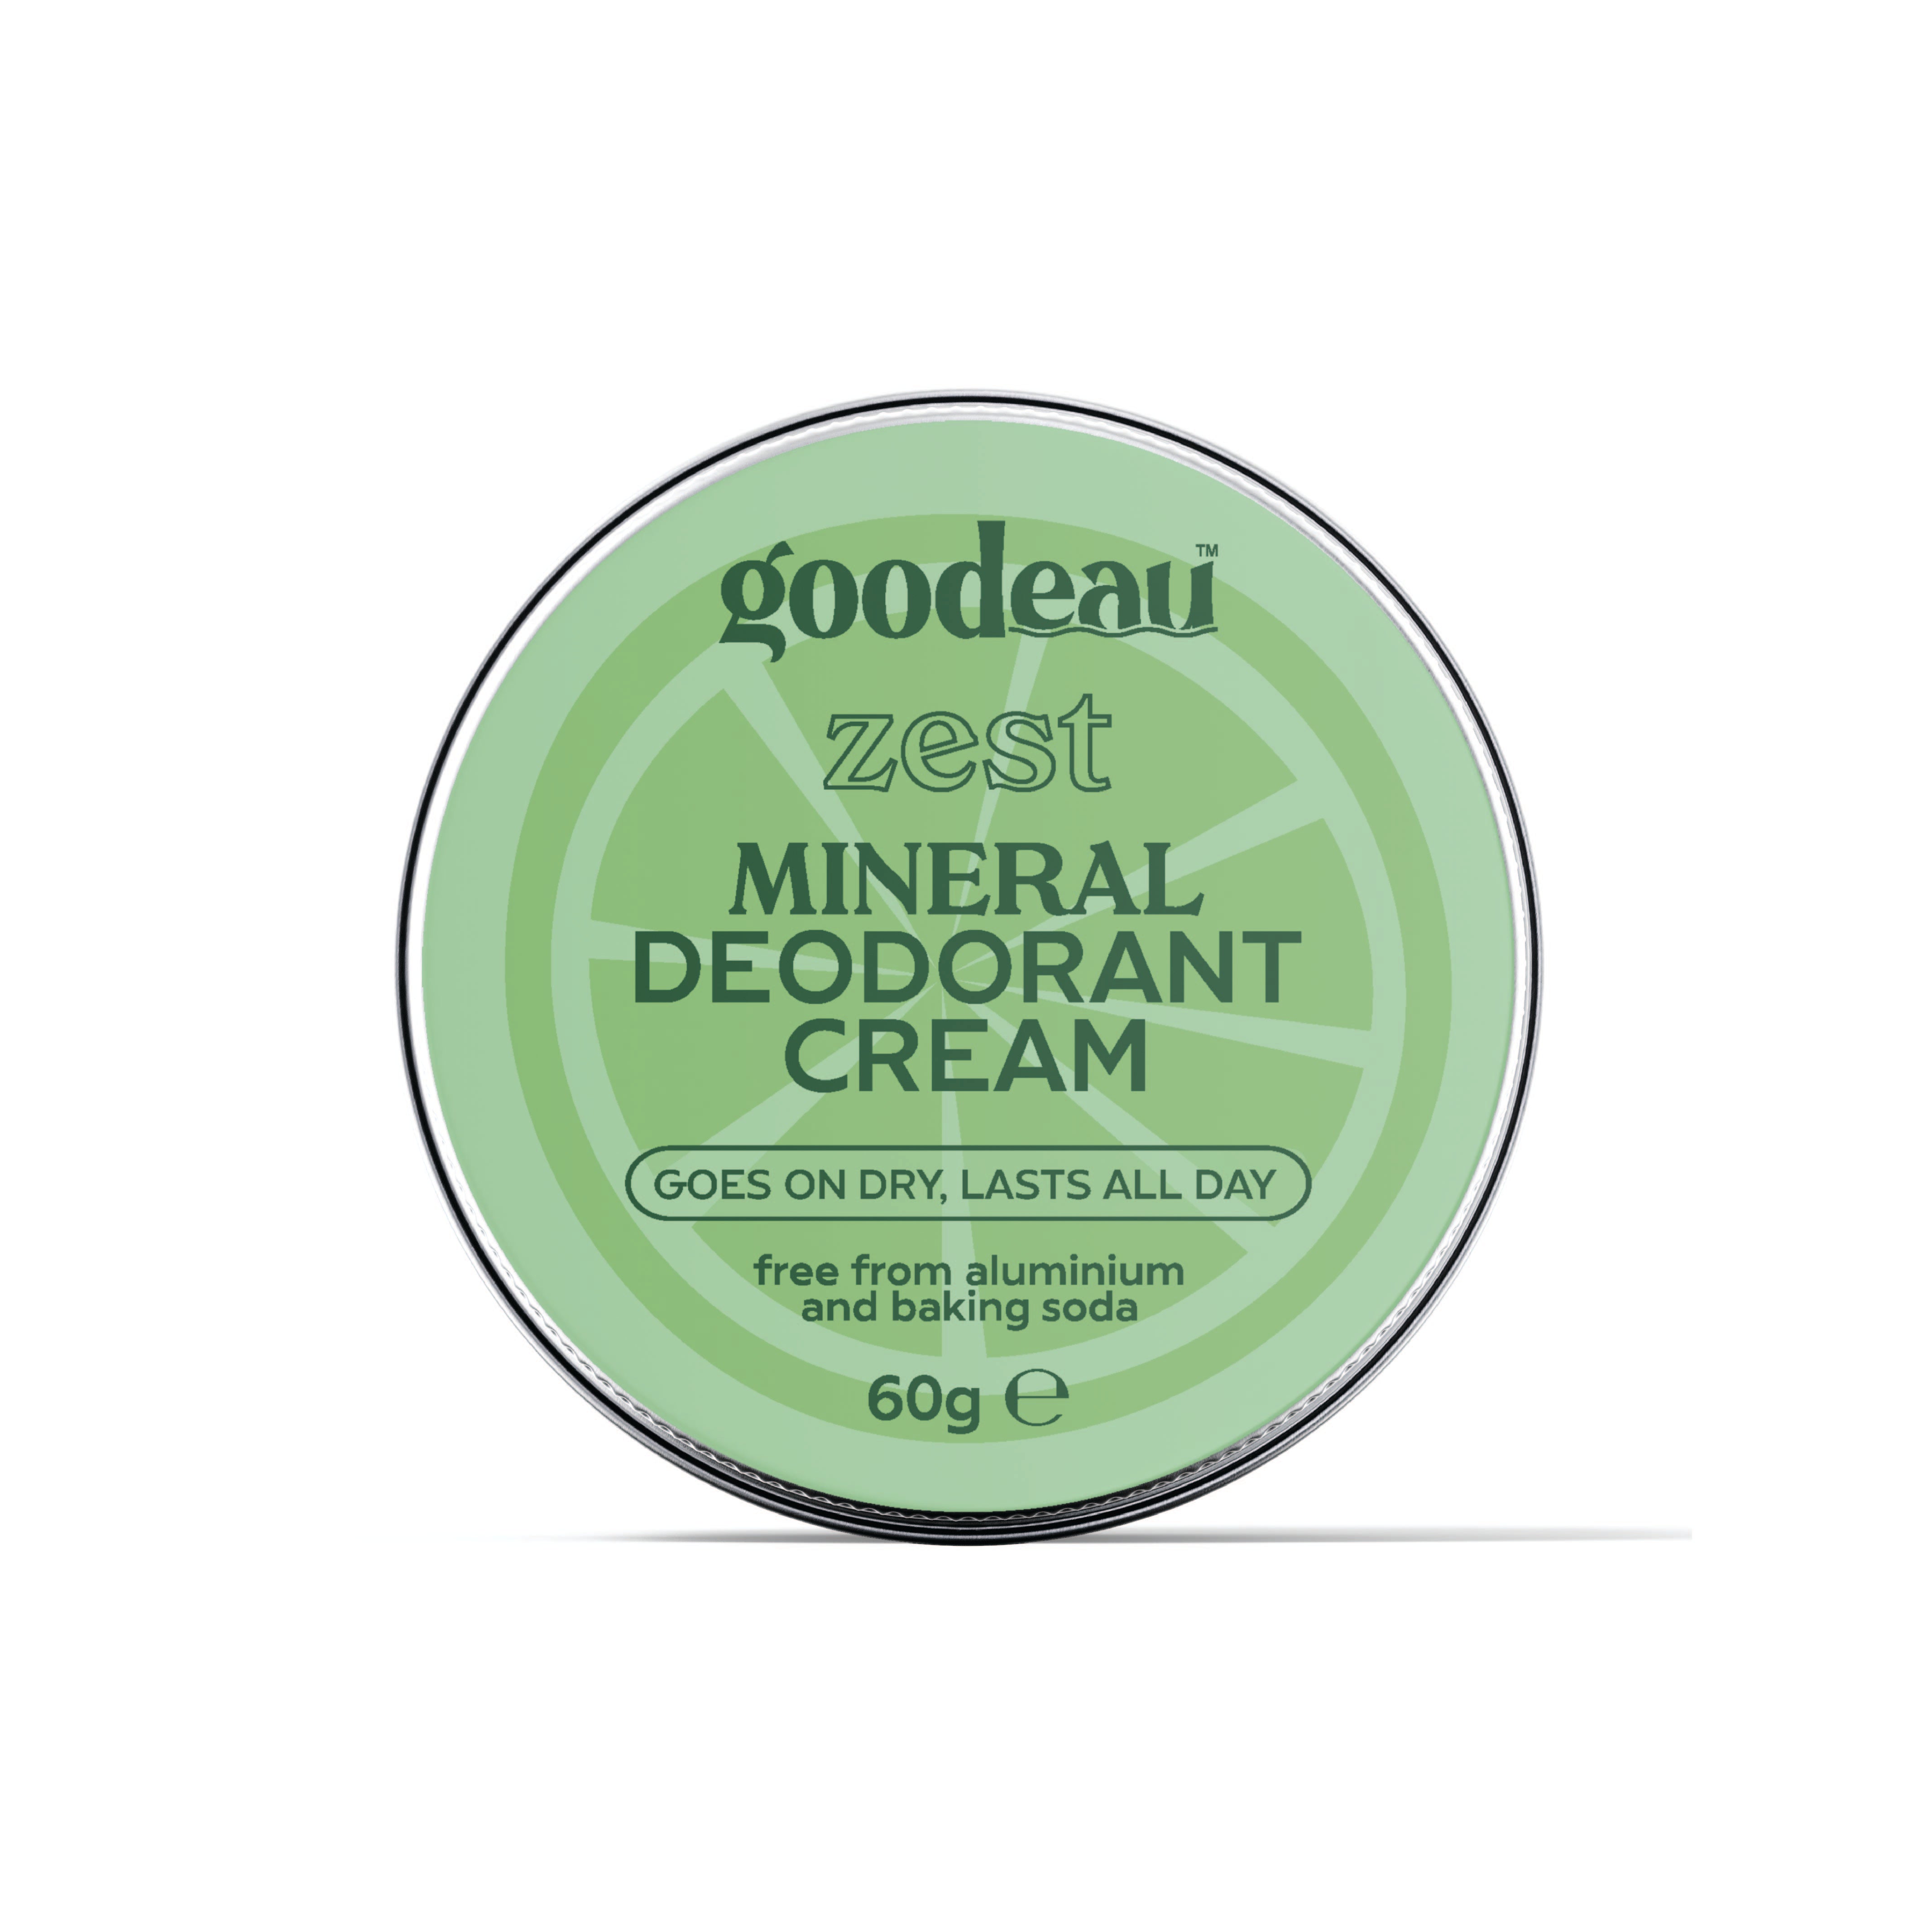 Mineral Deodorant 〰️ Zest - Goodeau